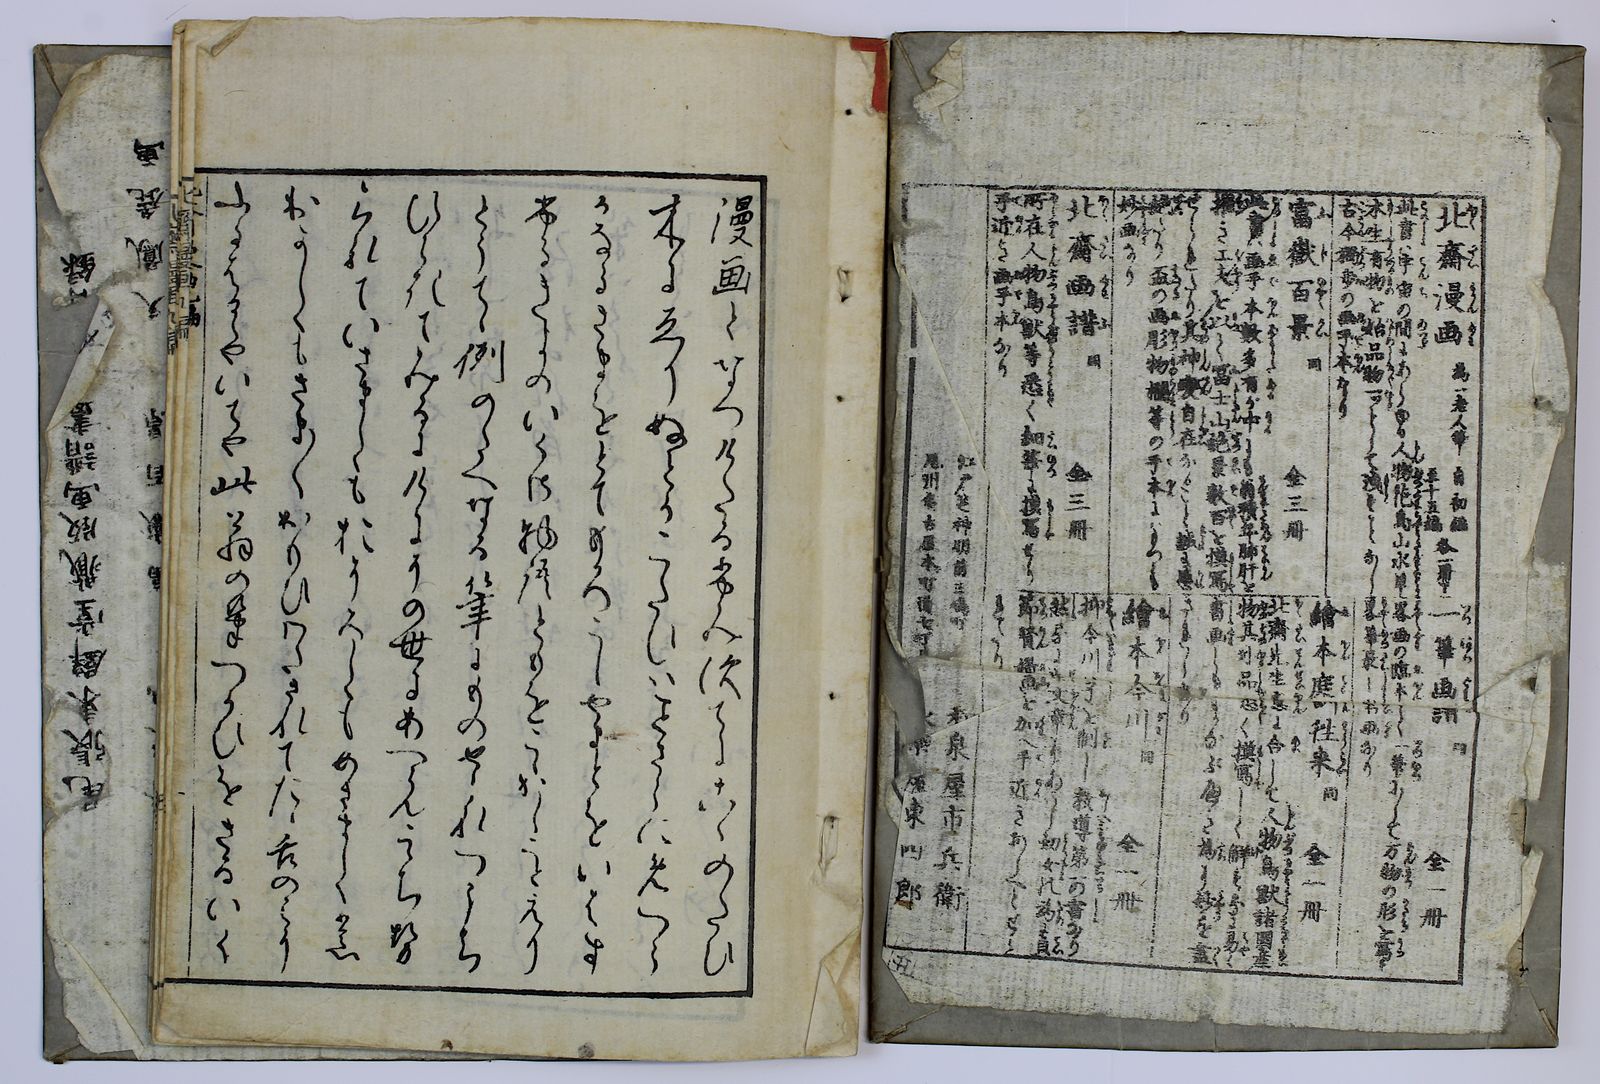 Hokusai, Katsushika (1760 - 1849), Japanisches Holzschnittbuch (wohl Manga Skizzen), insgesamt 28 ( - Image 8 of 8